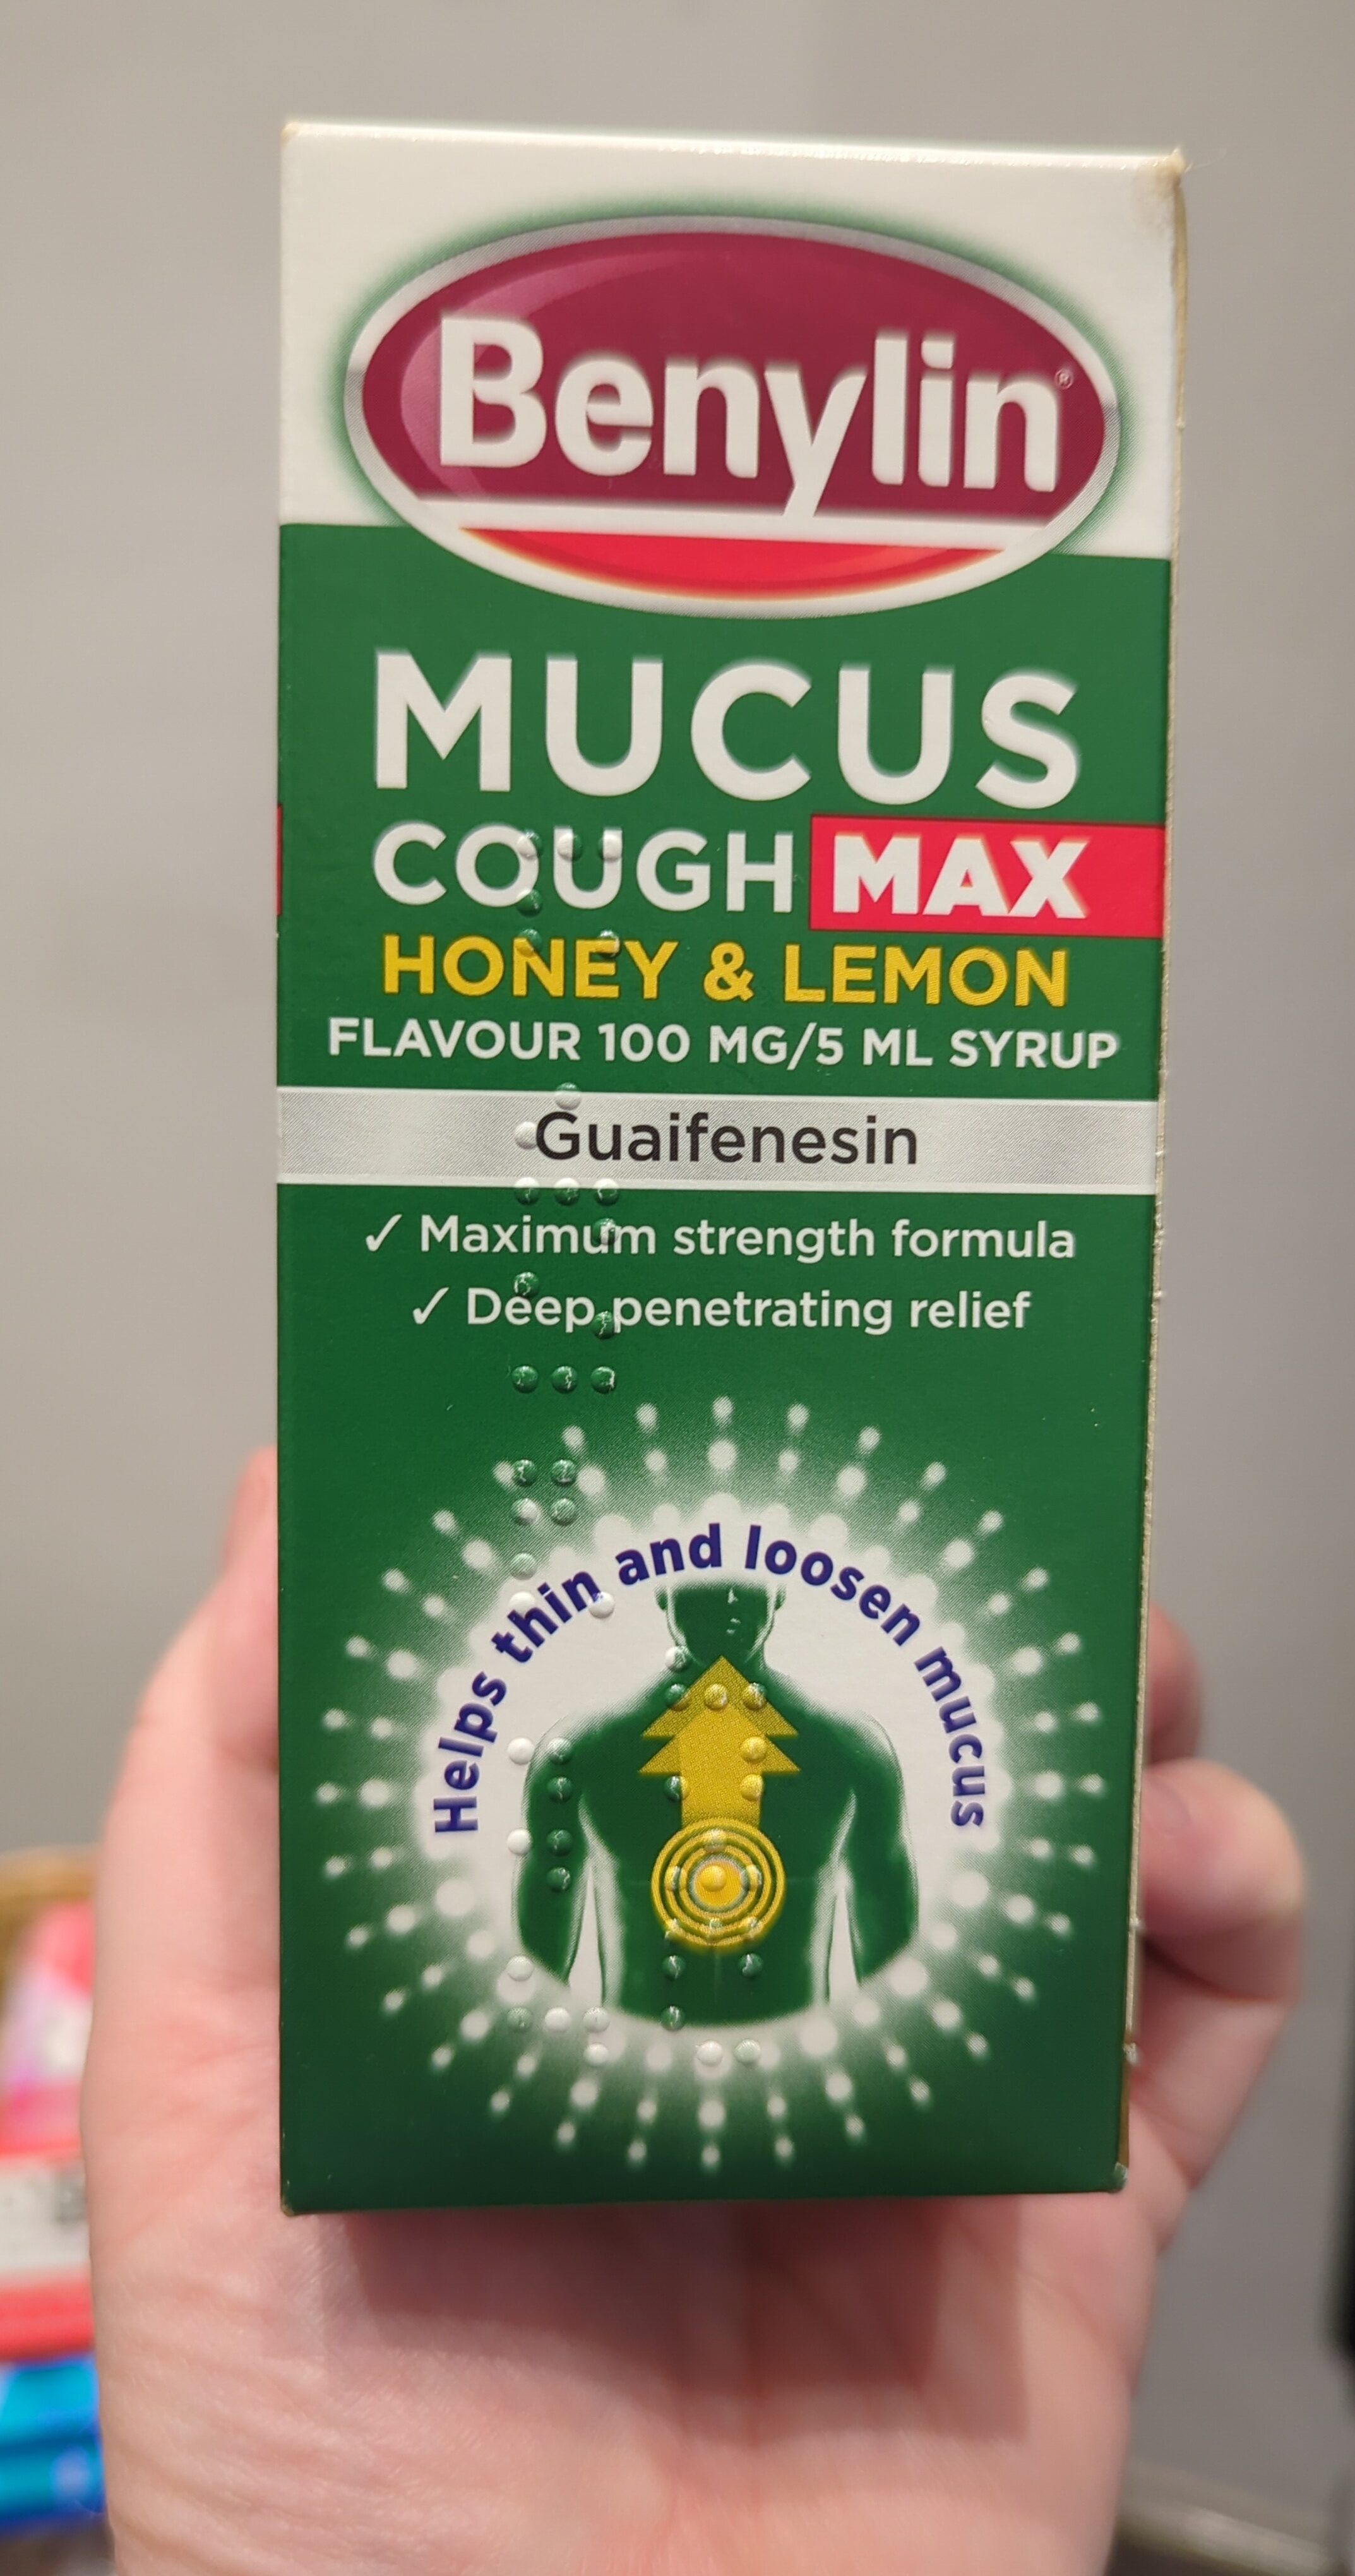 Benylin Mucus Cough Max (Honey & Lemon) - Product - en